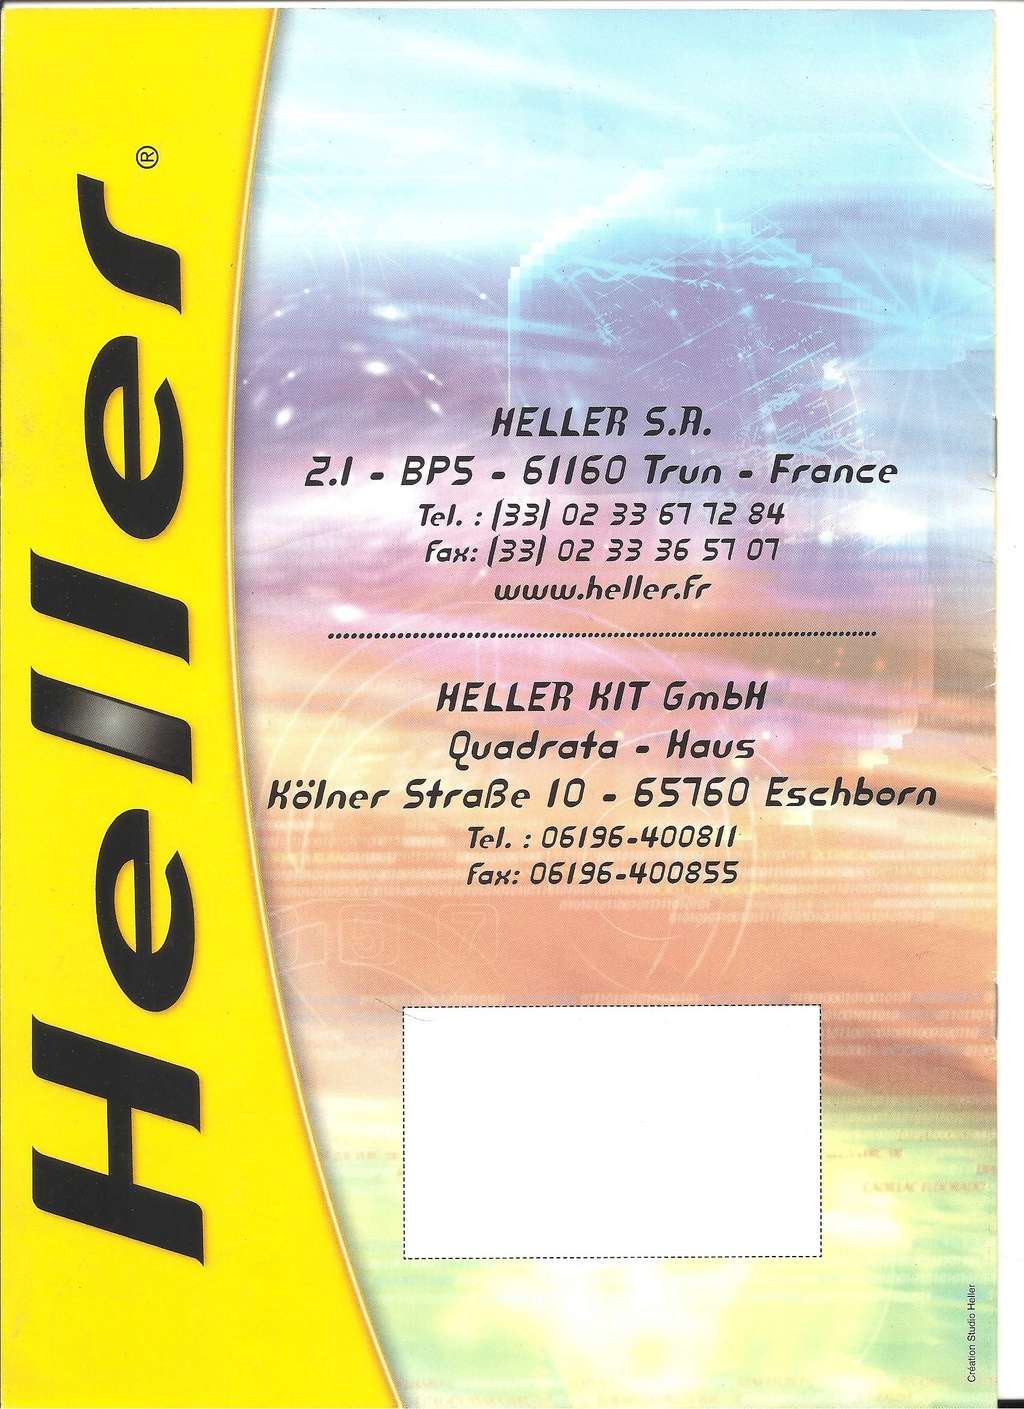 [2001] Catalogue de la gamme KIT 2001 Hell1547